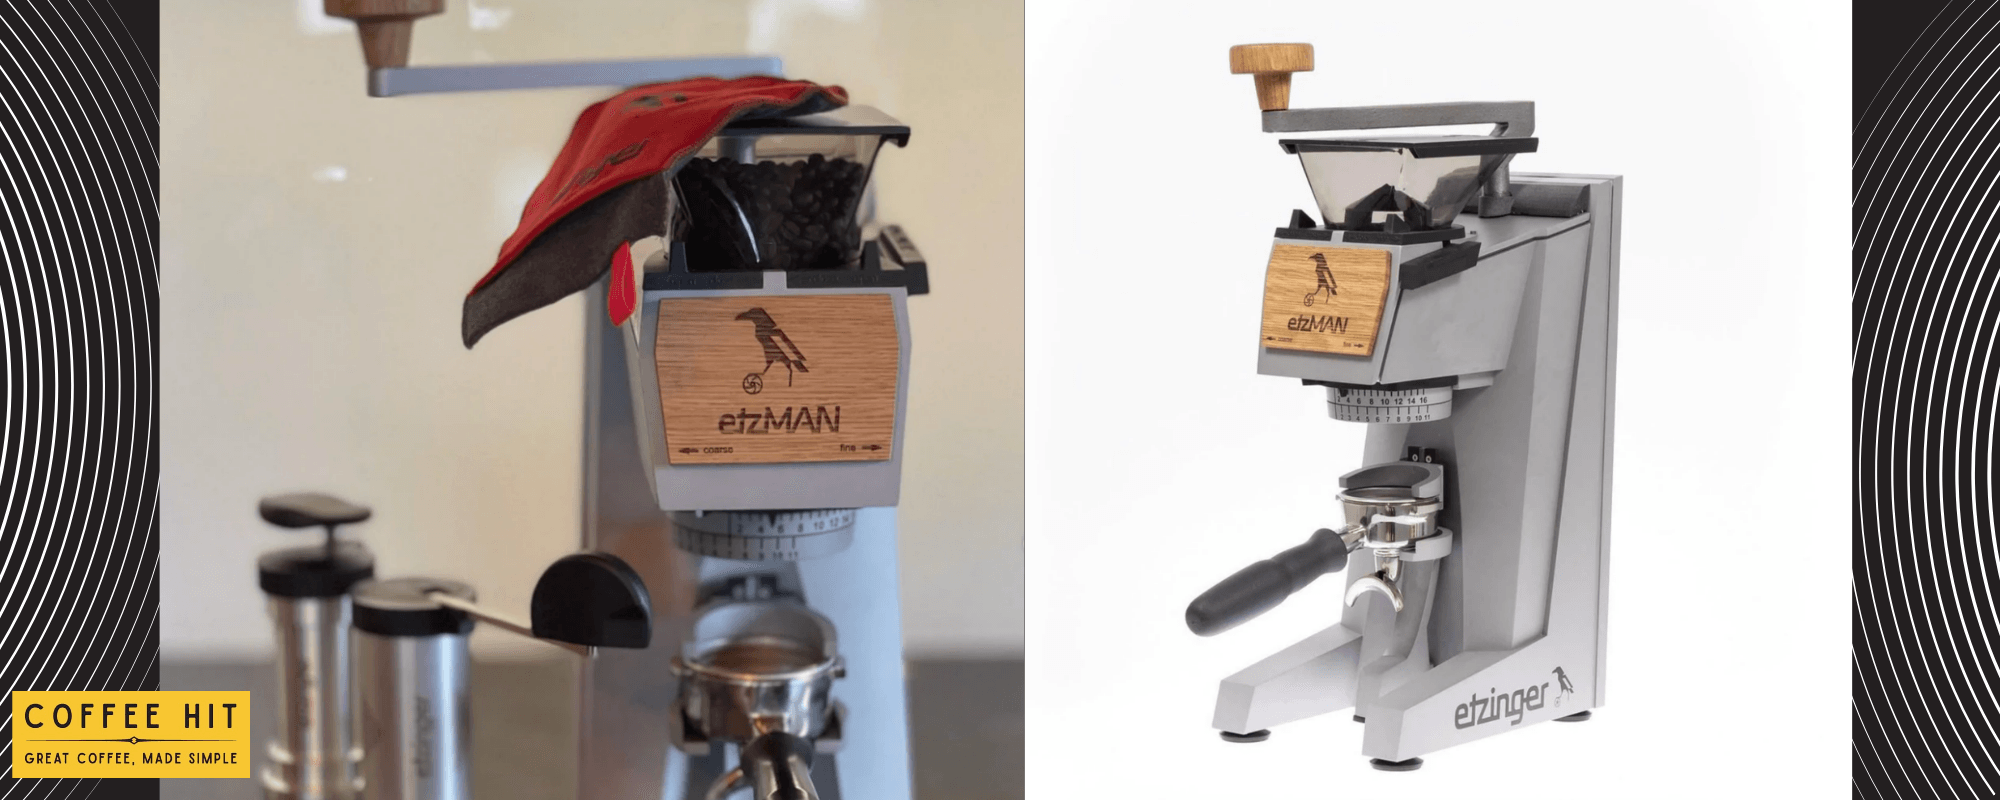 The Etzinger etzMAN grinder has arrived! - Coffee Hit